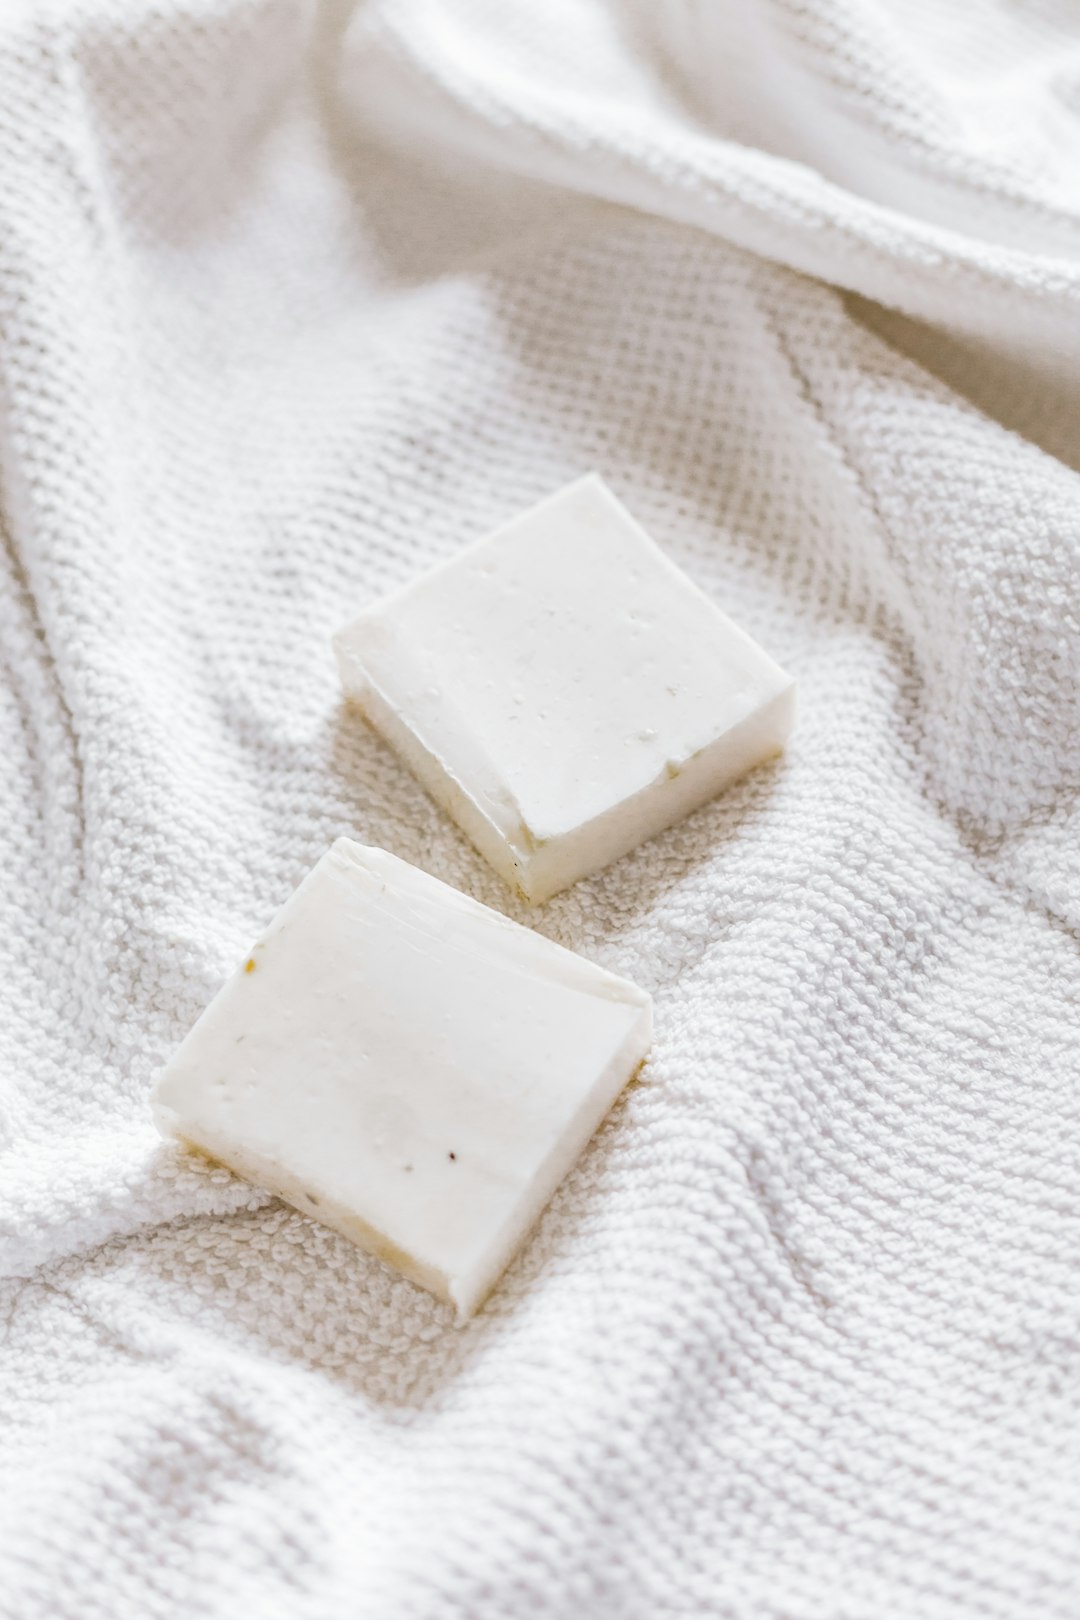 white square soap on white textile